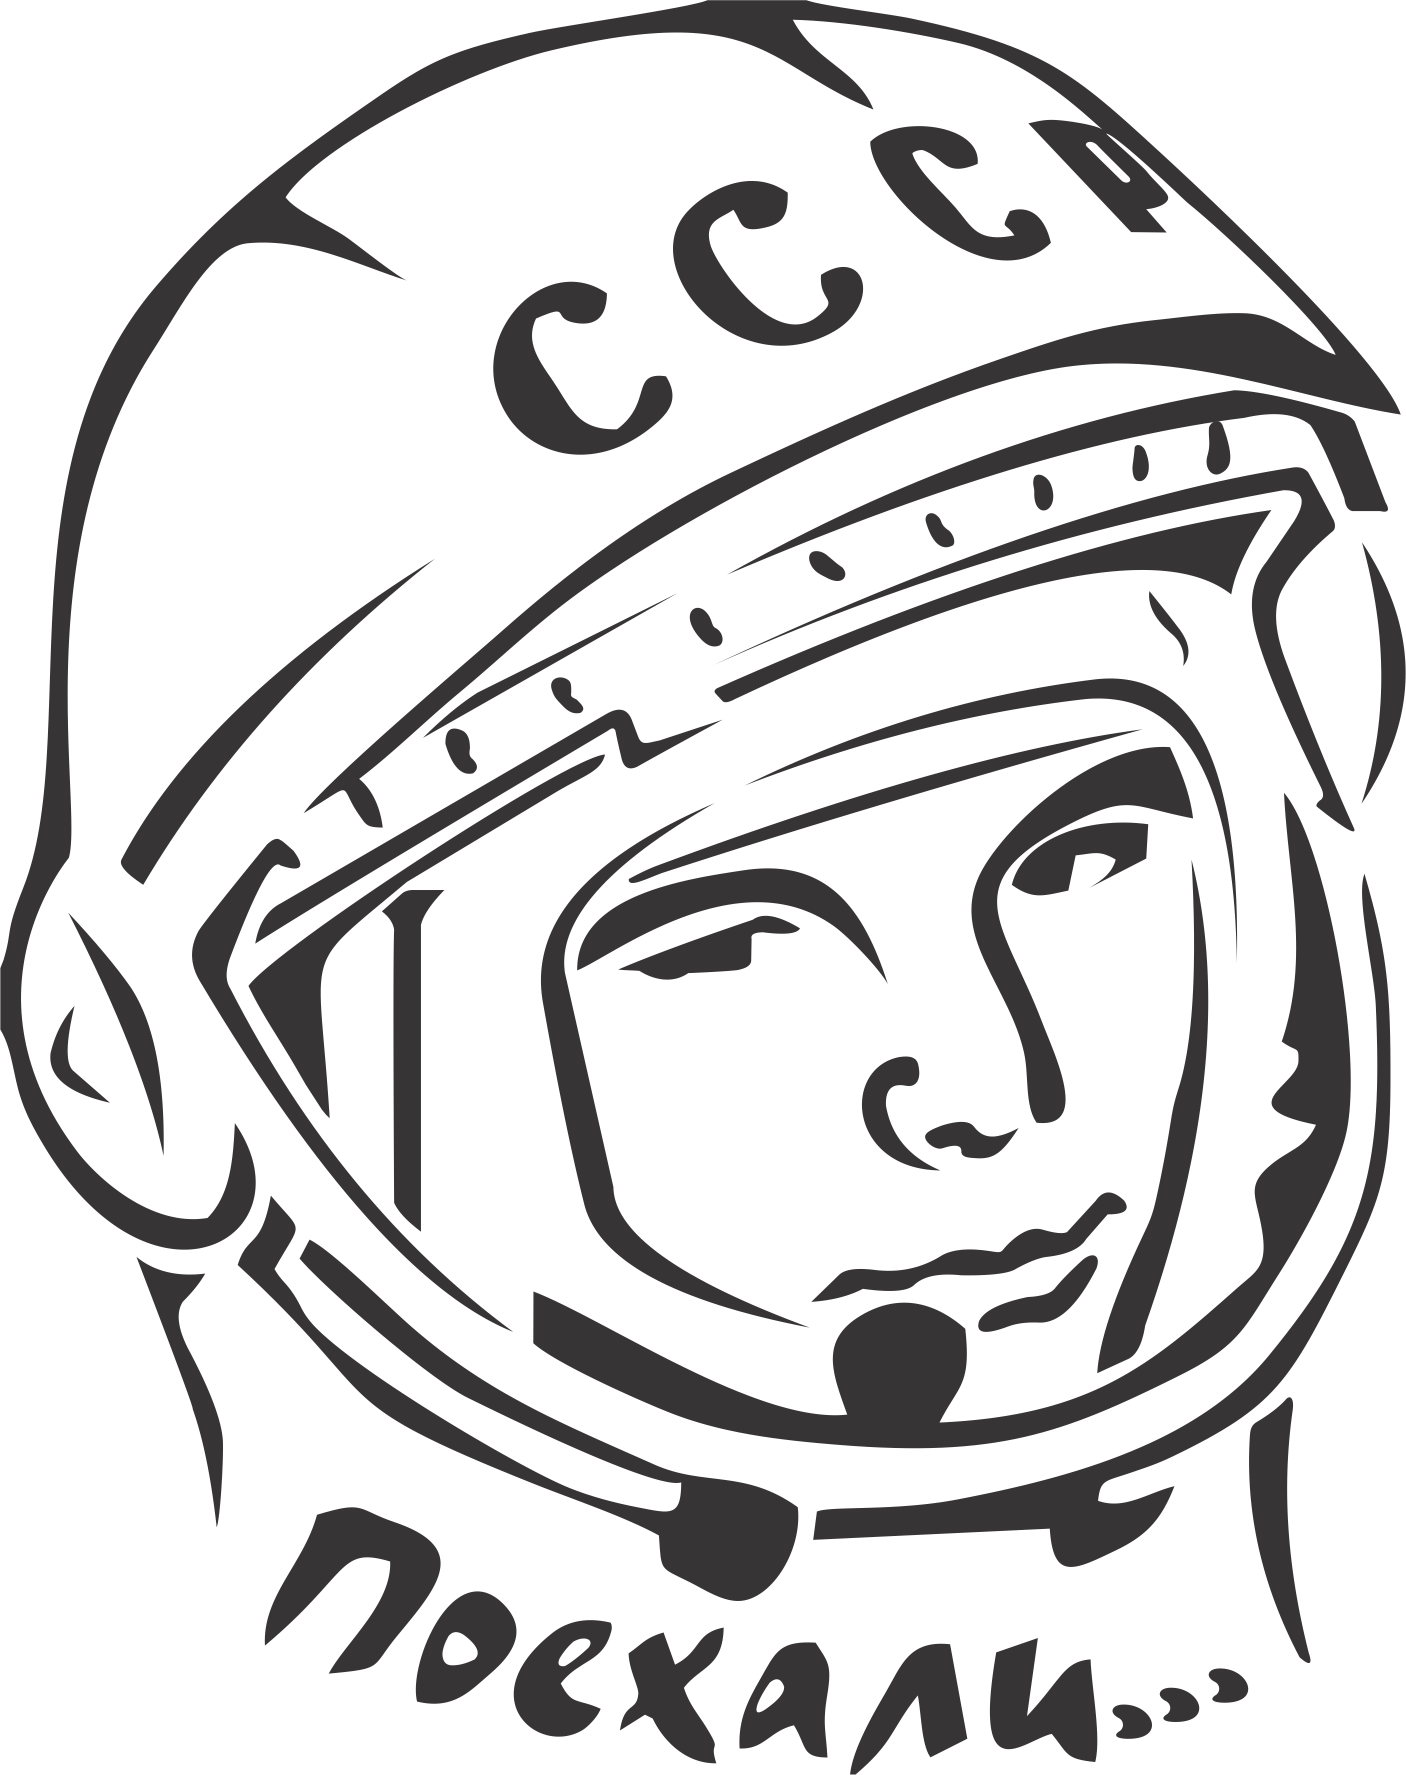 Yuri Gagarin PNG images 